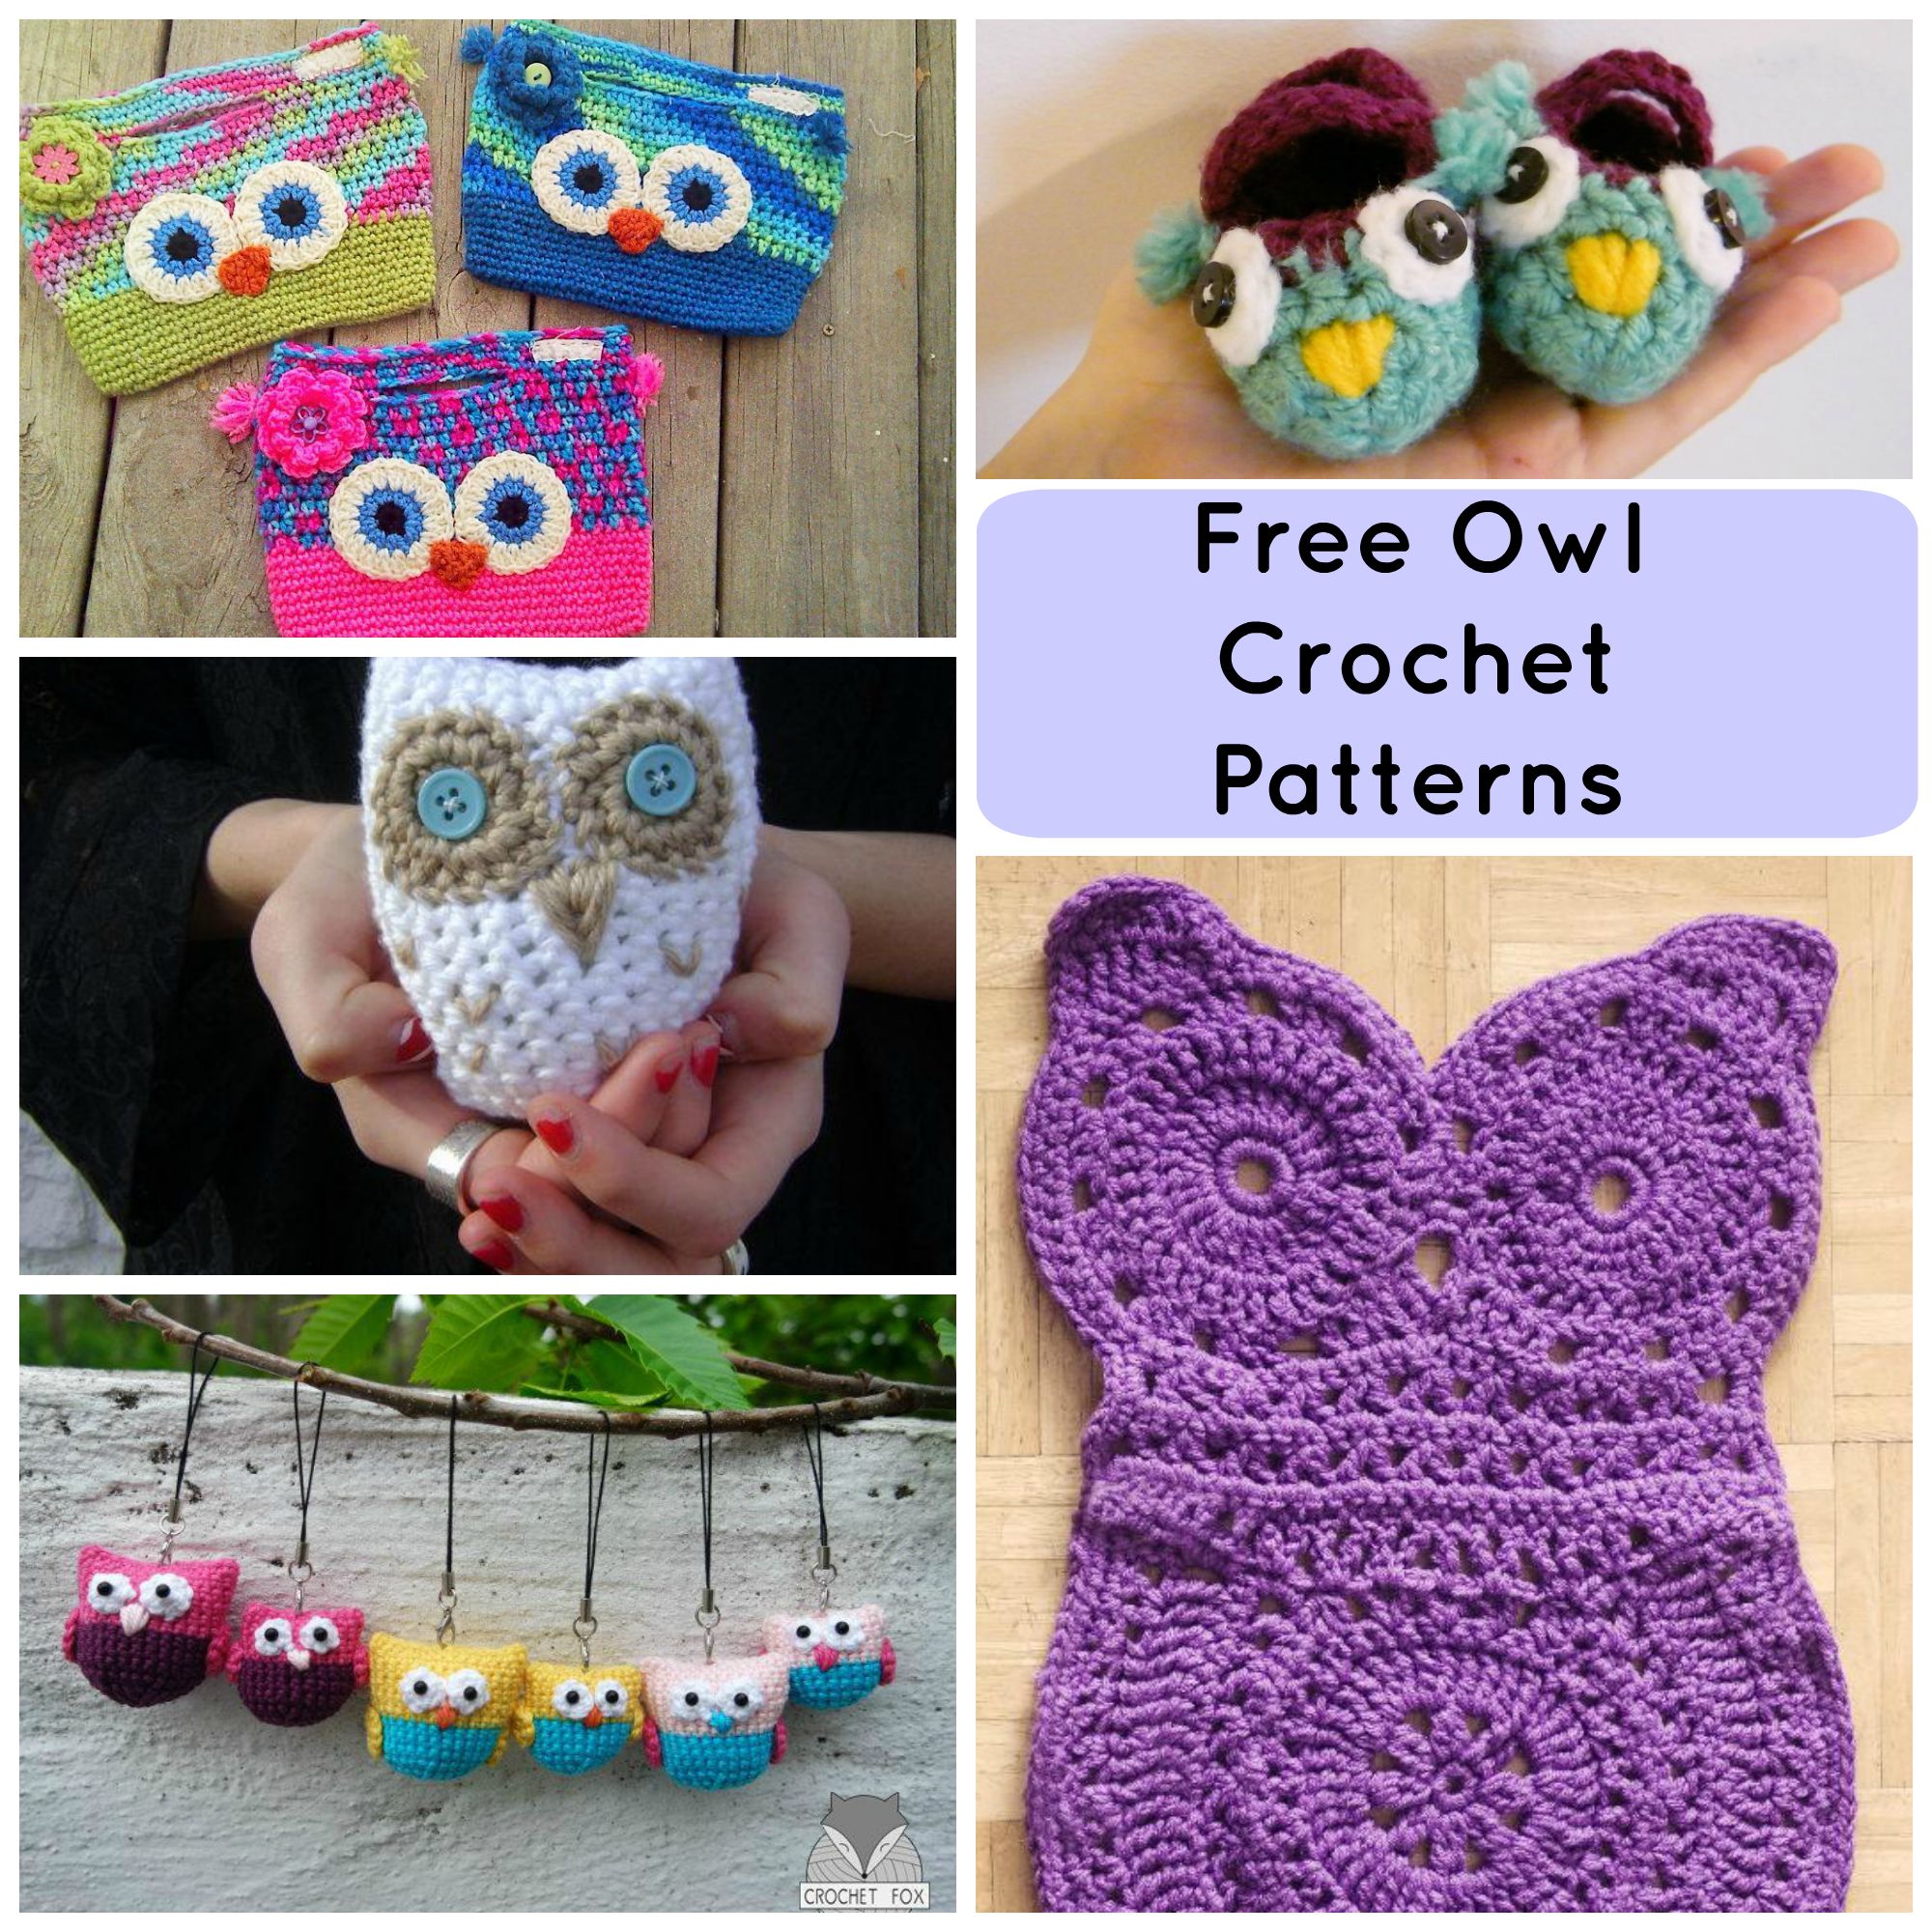 Free Owl Crochet Patterns